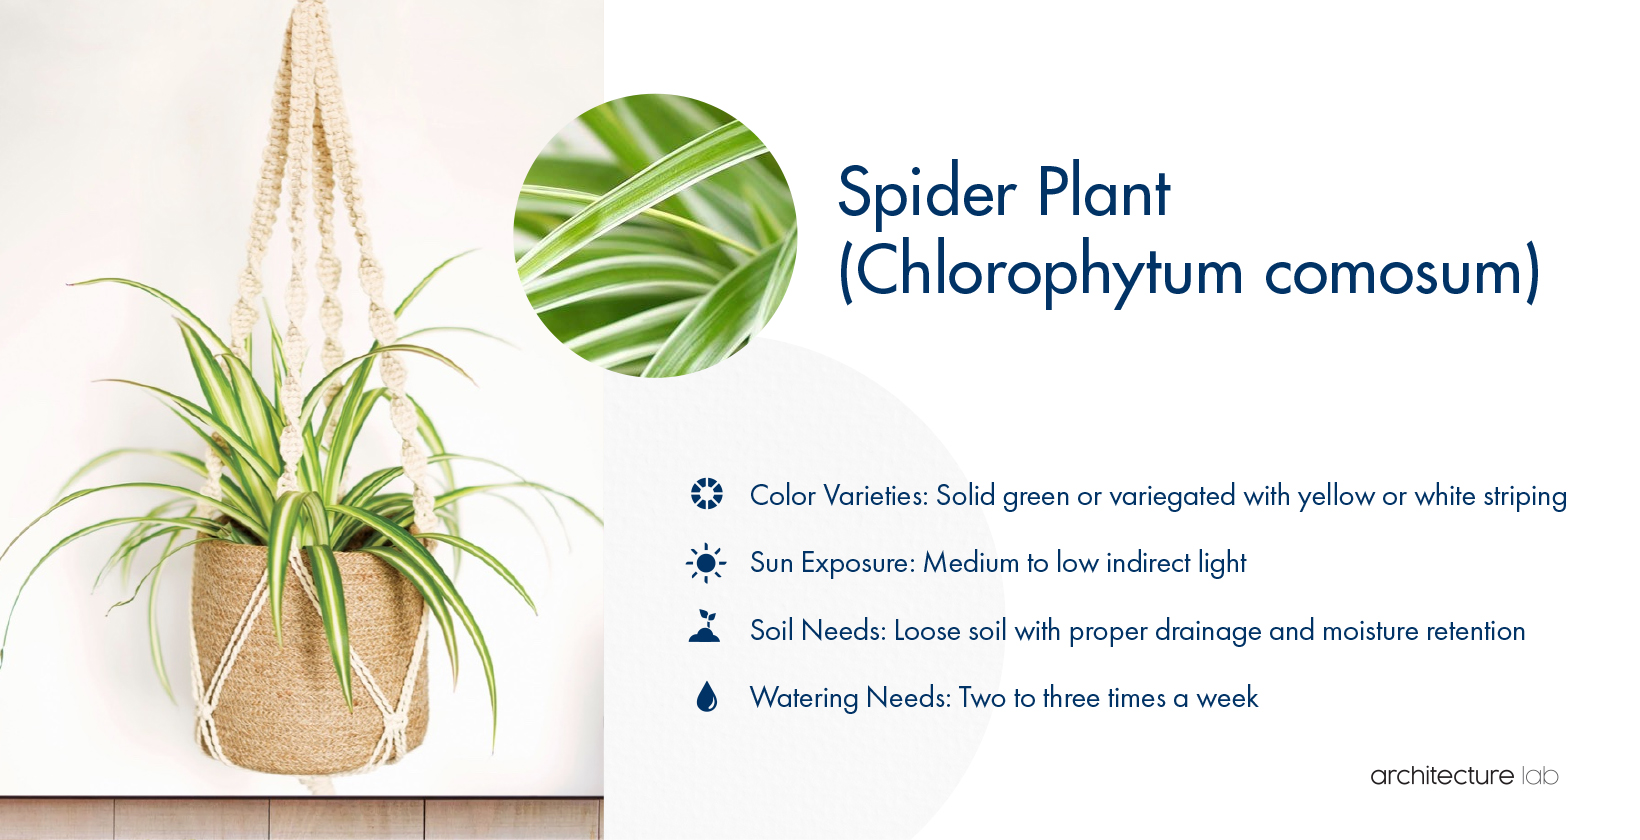 12. Spider plant (chlorophytum comosum)